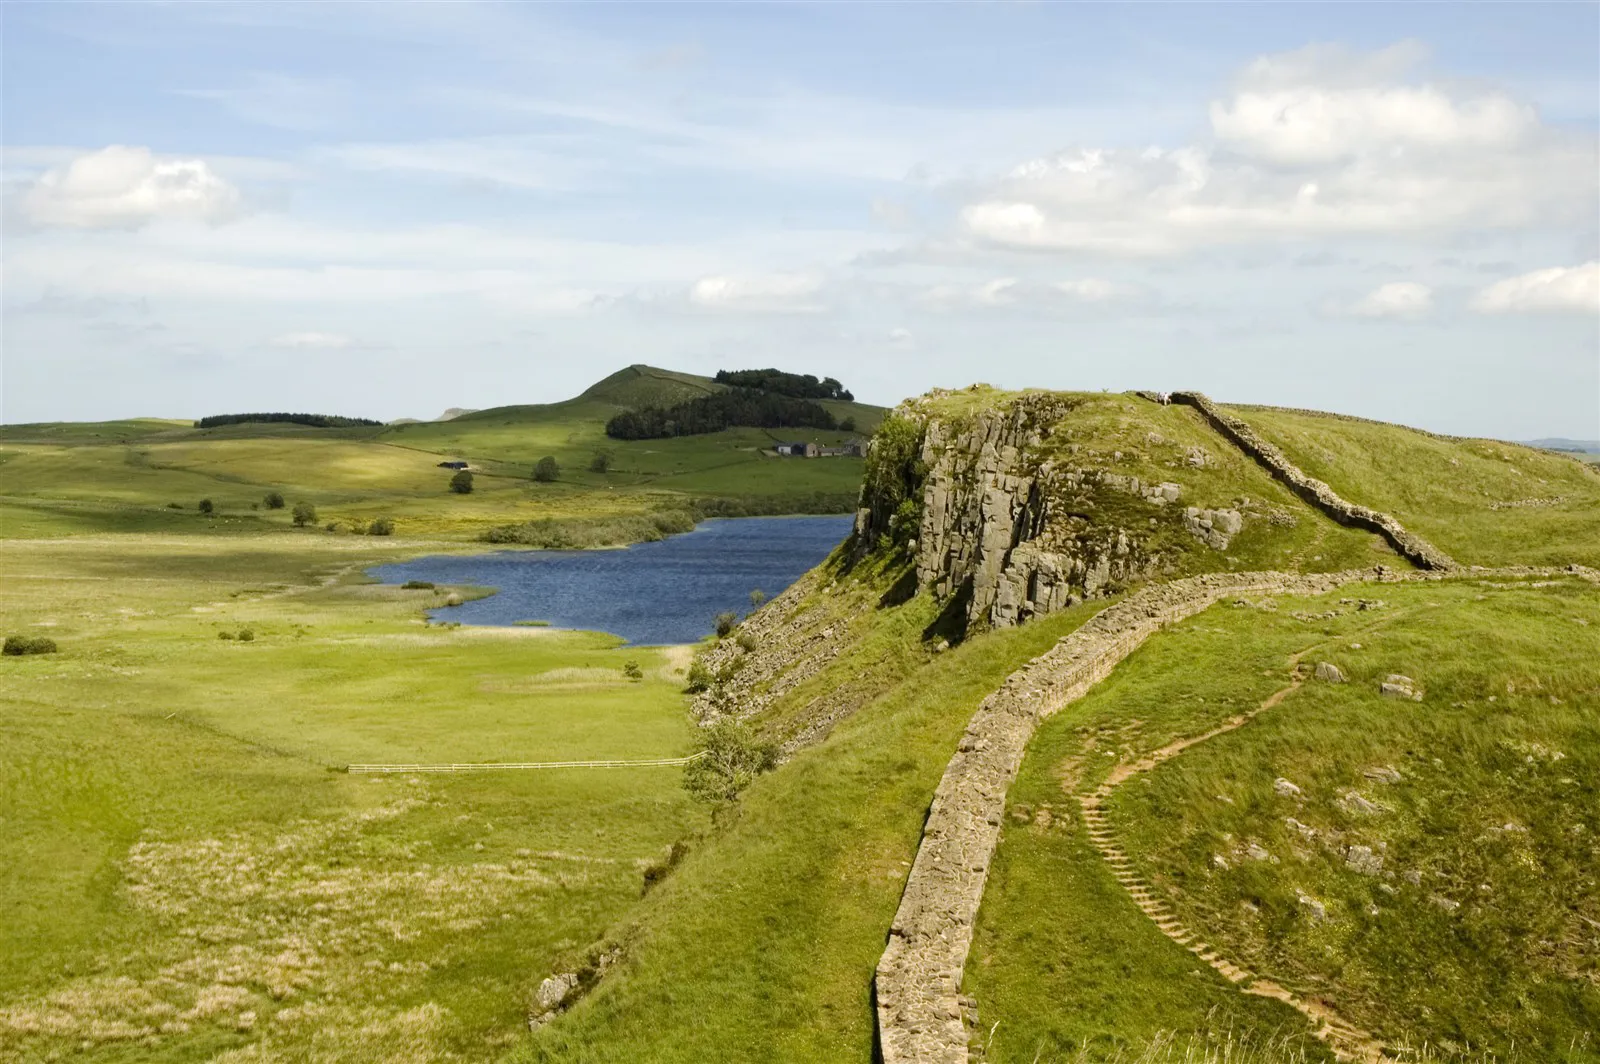 Hadrian's Wall in Cumbria